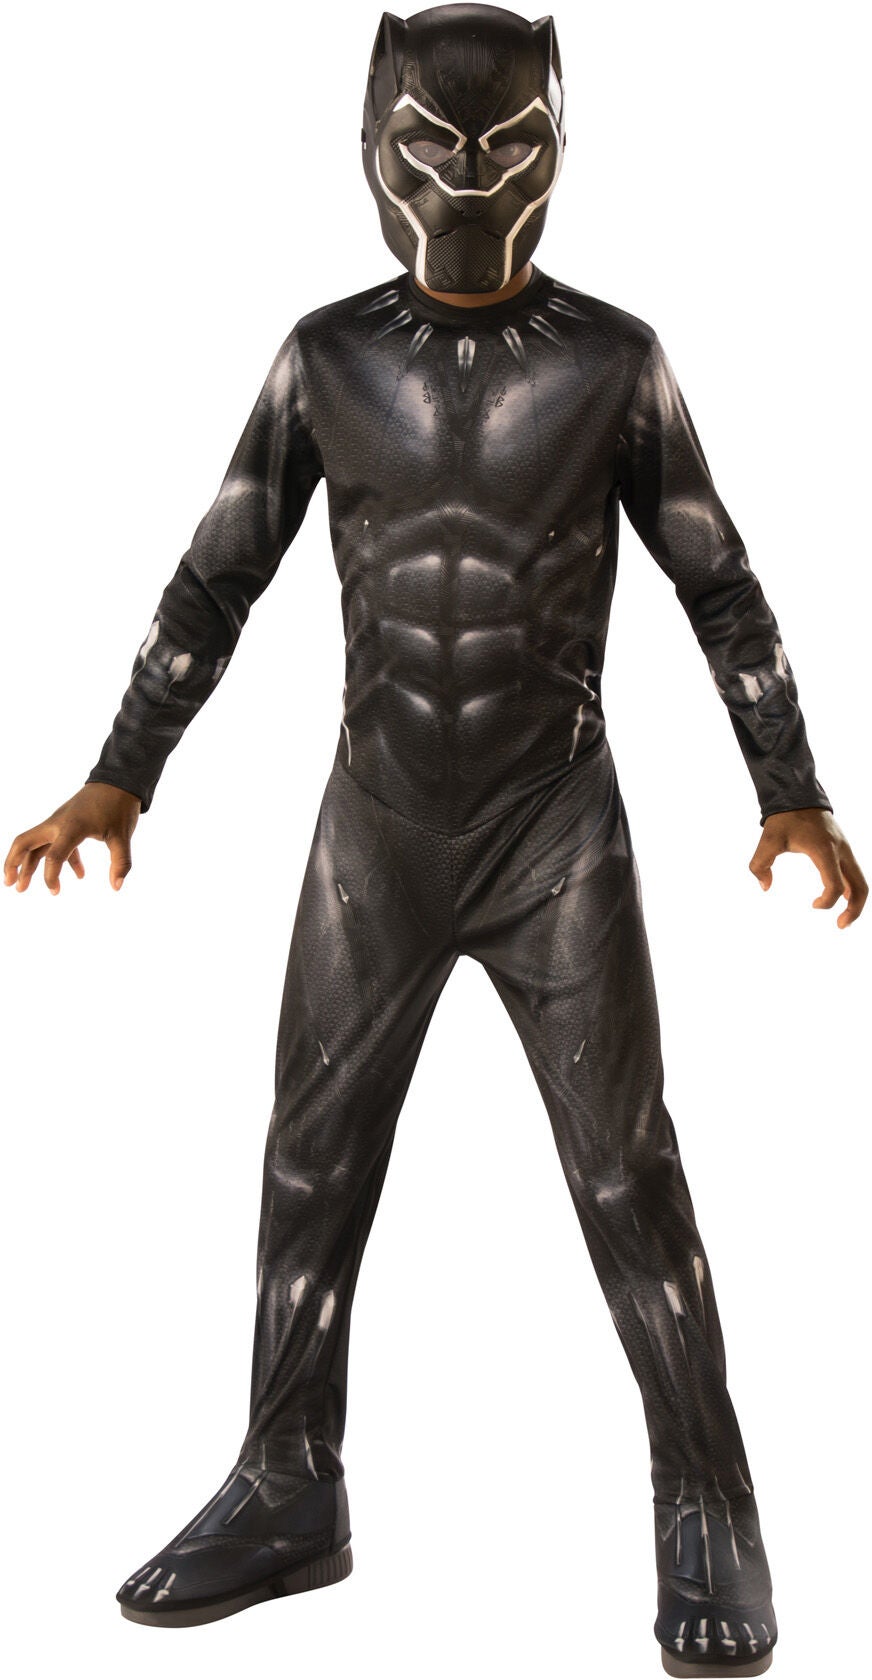 Marvel Avengers Black Panther Kostüm mit Maske, 5-7 Jahre von Marvel Avengers